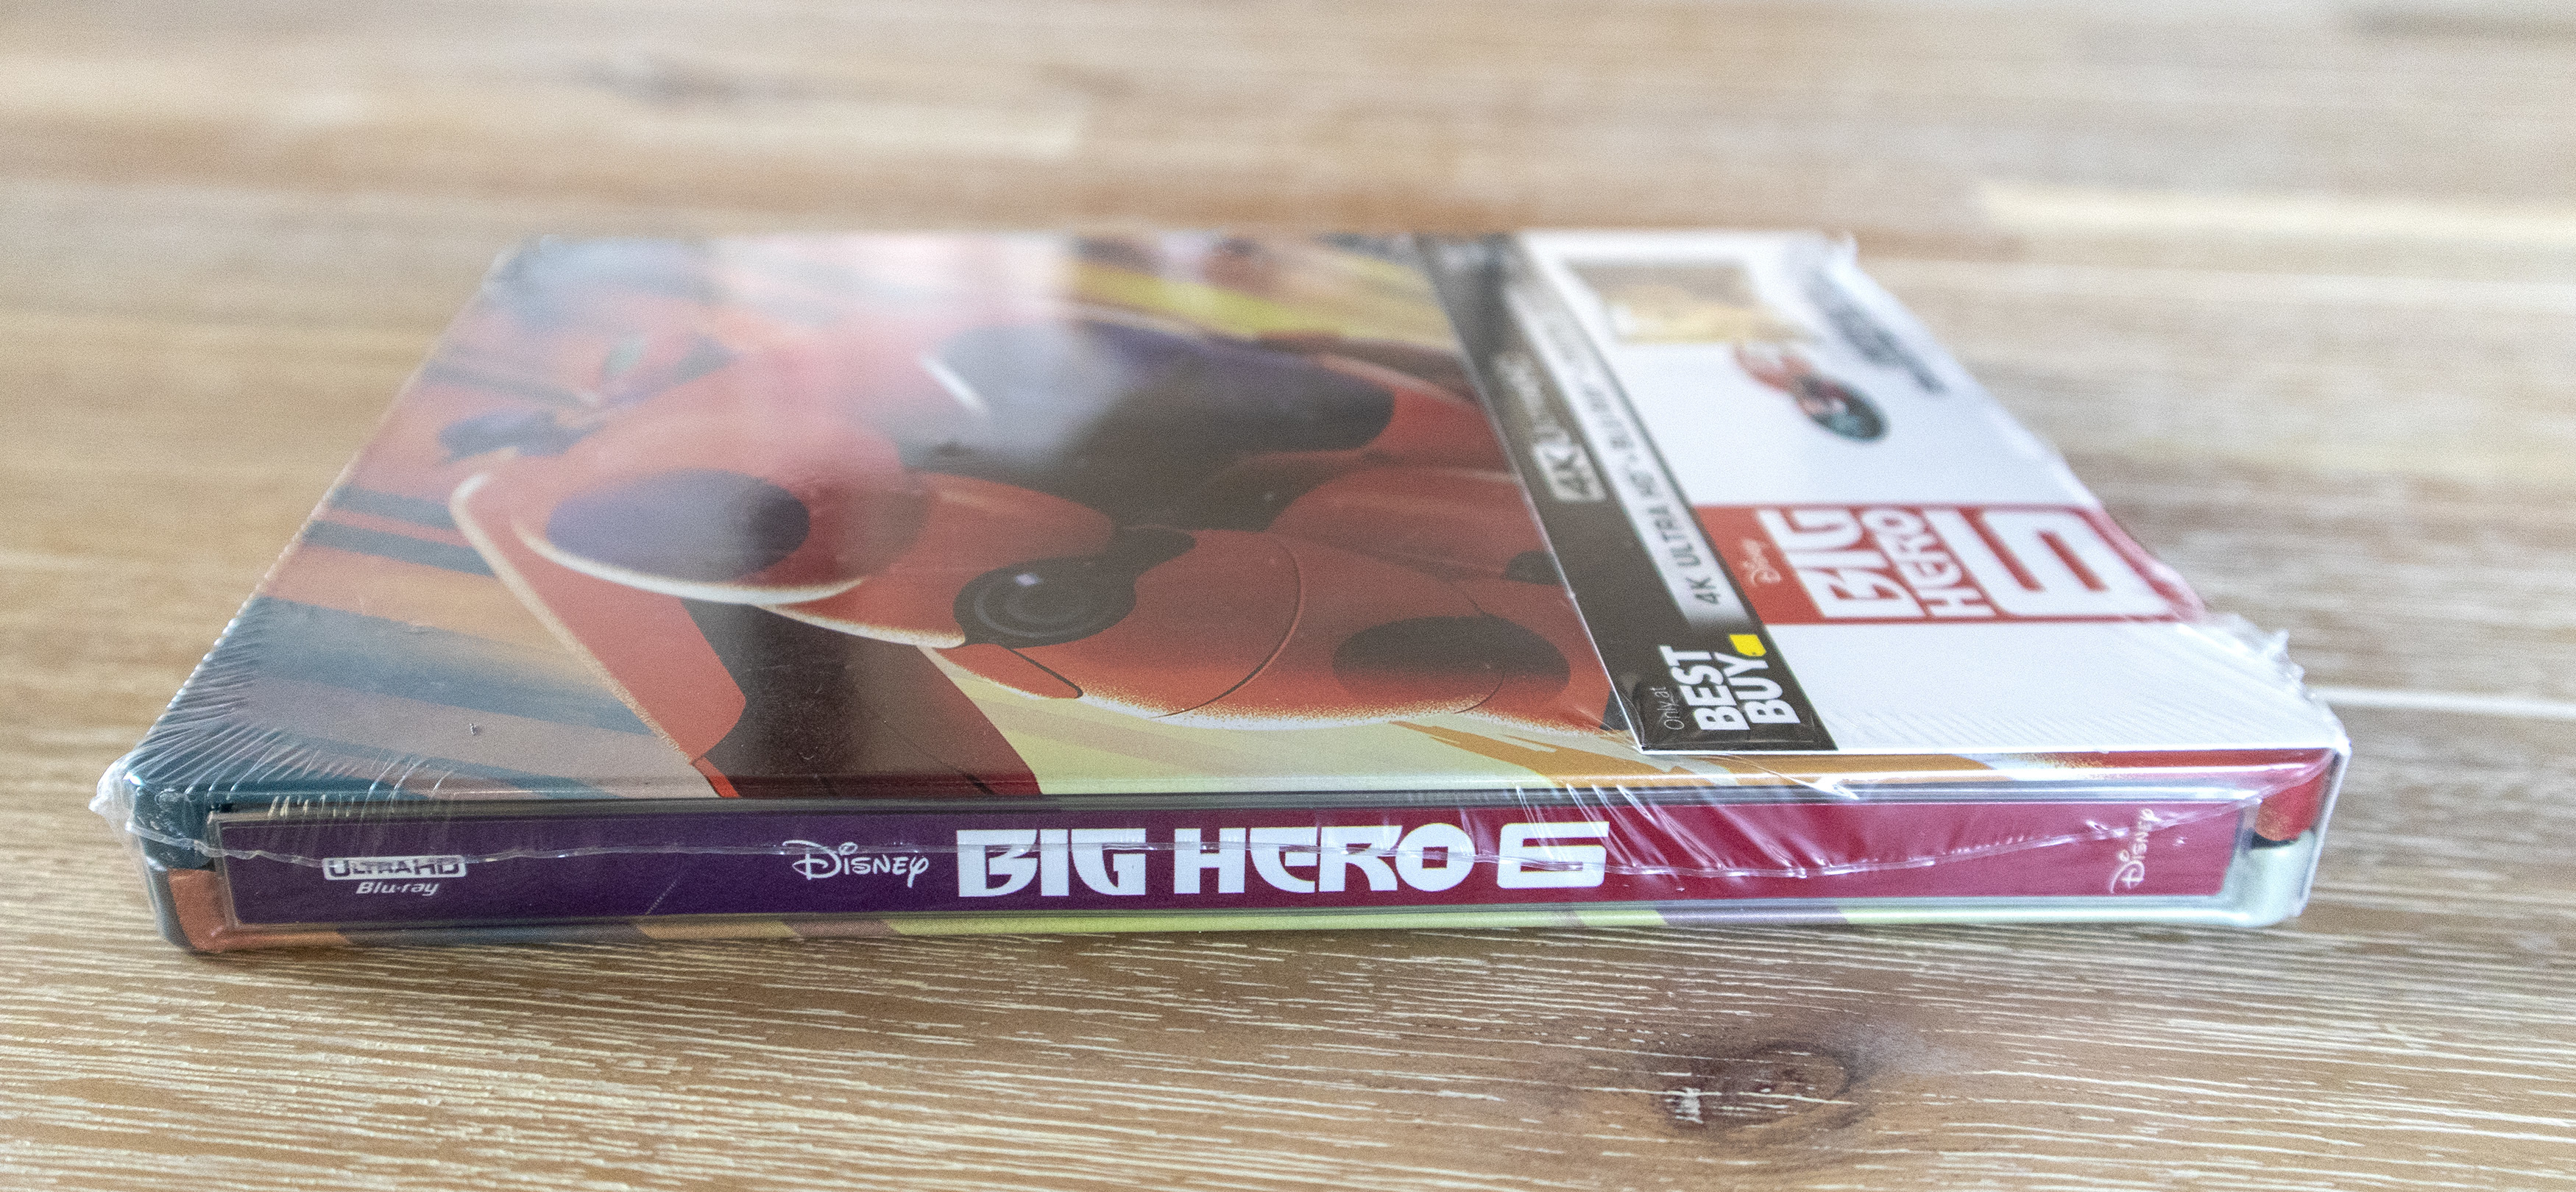 Big Hero 6 4K Ultra hd best buy steelbook ベイマックス スチールブック